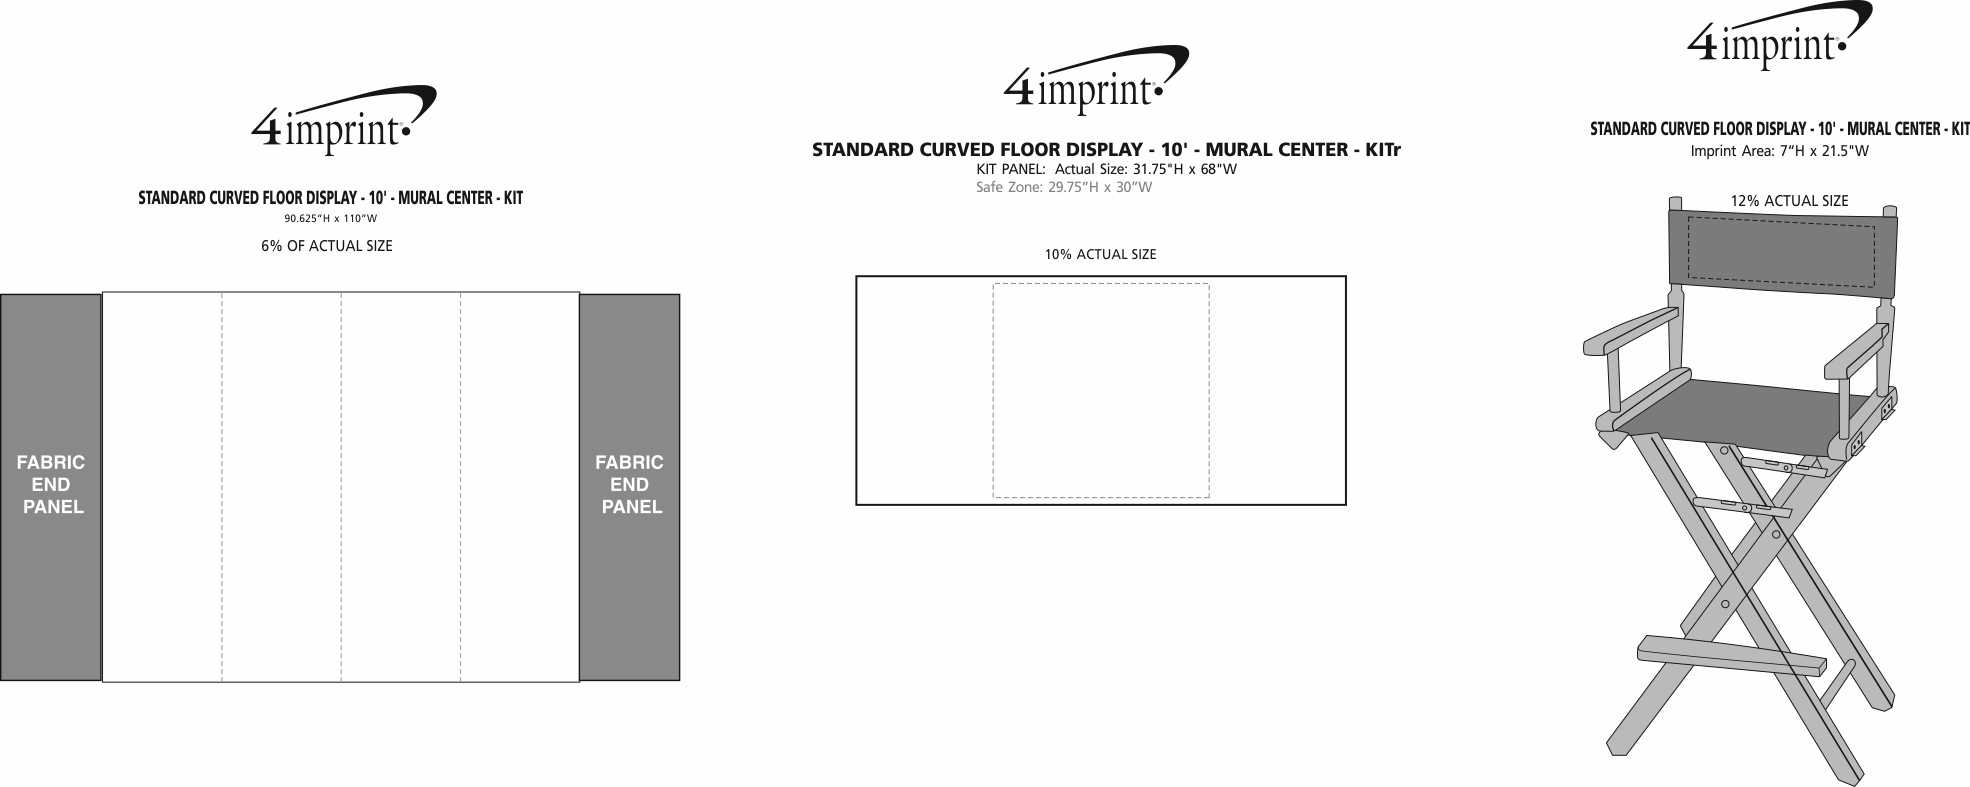 Imprint Area of Standard Curved Floor Display - 10' - Mural Center - Kit